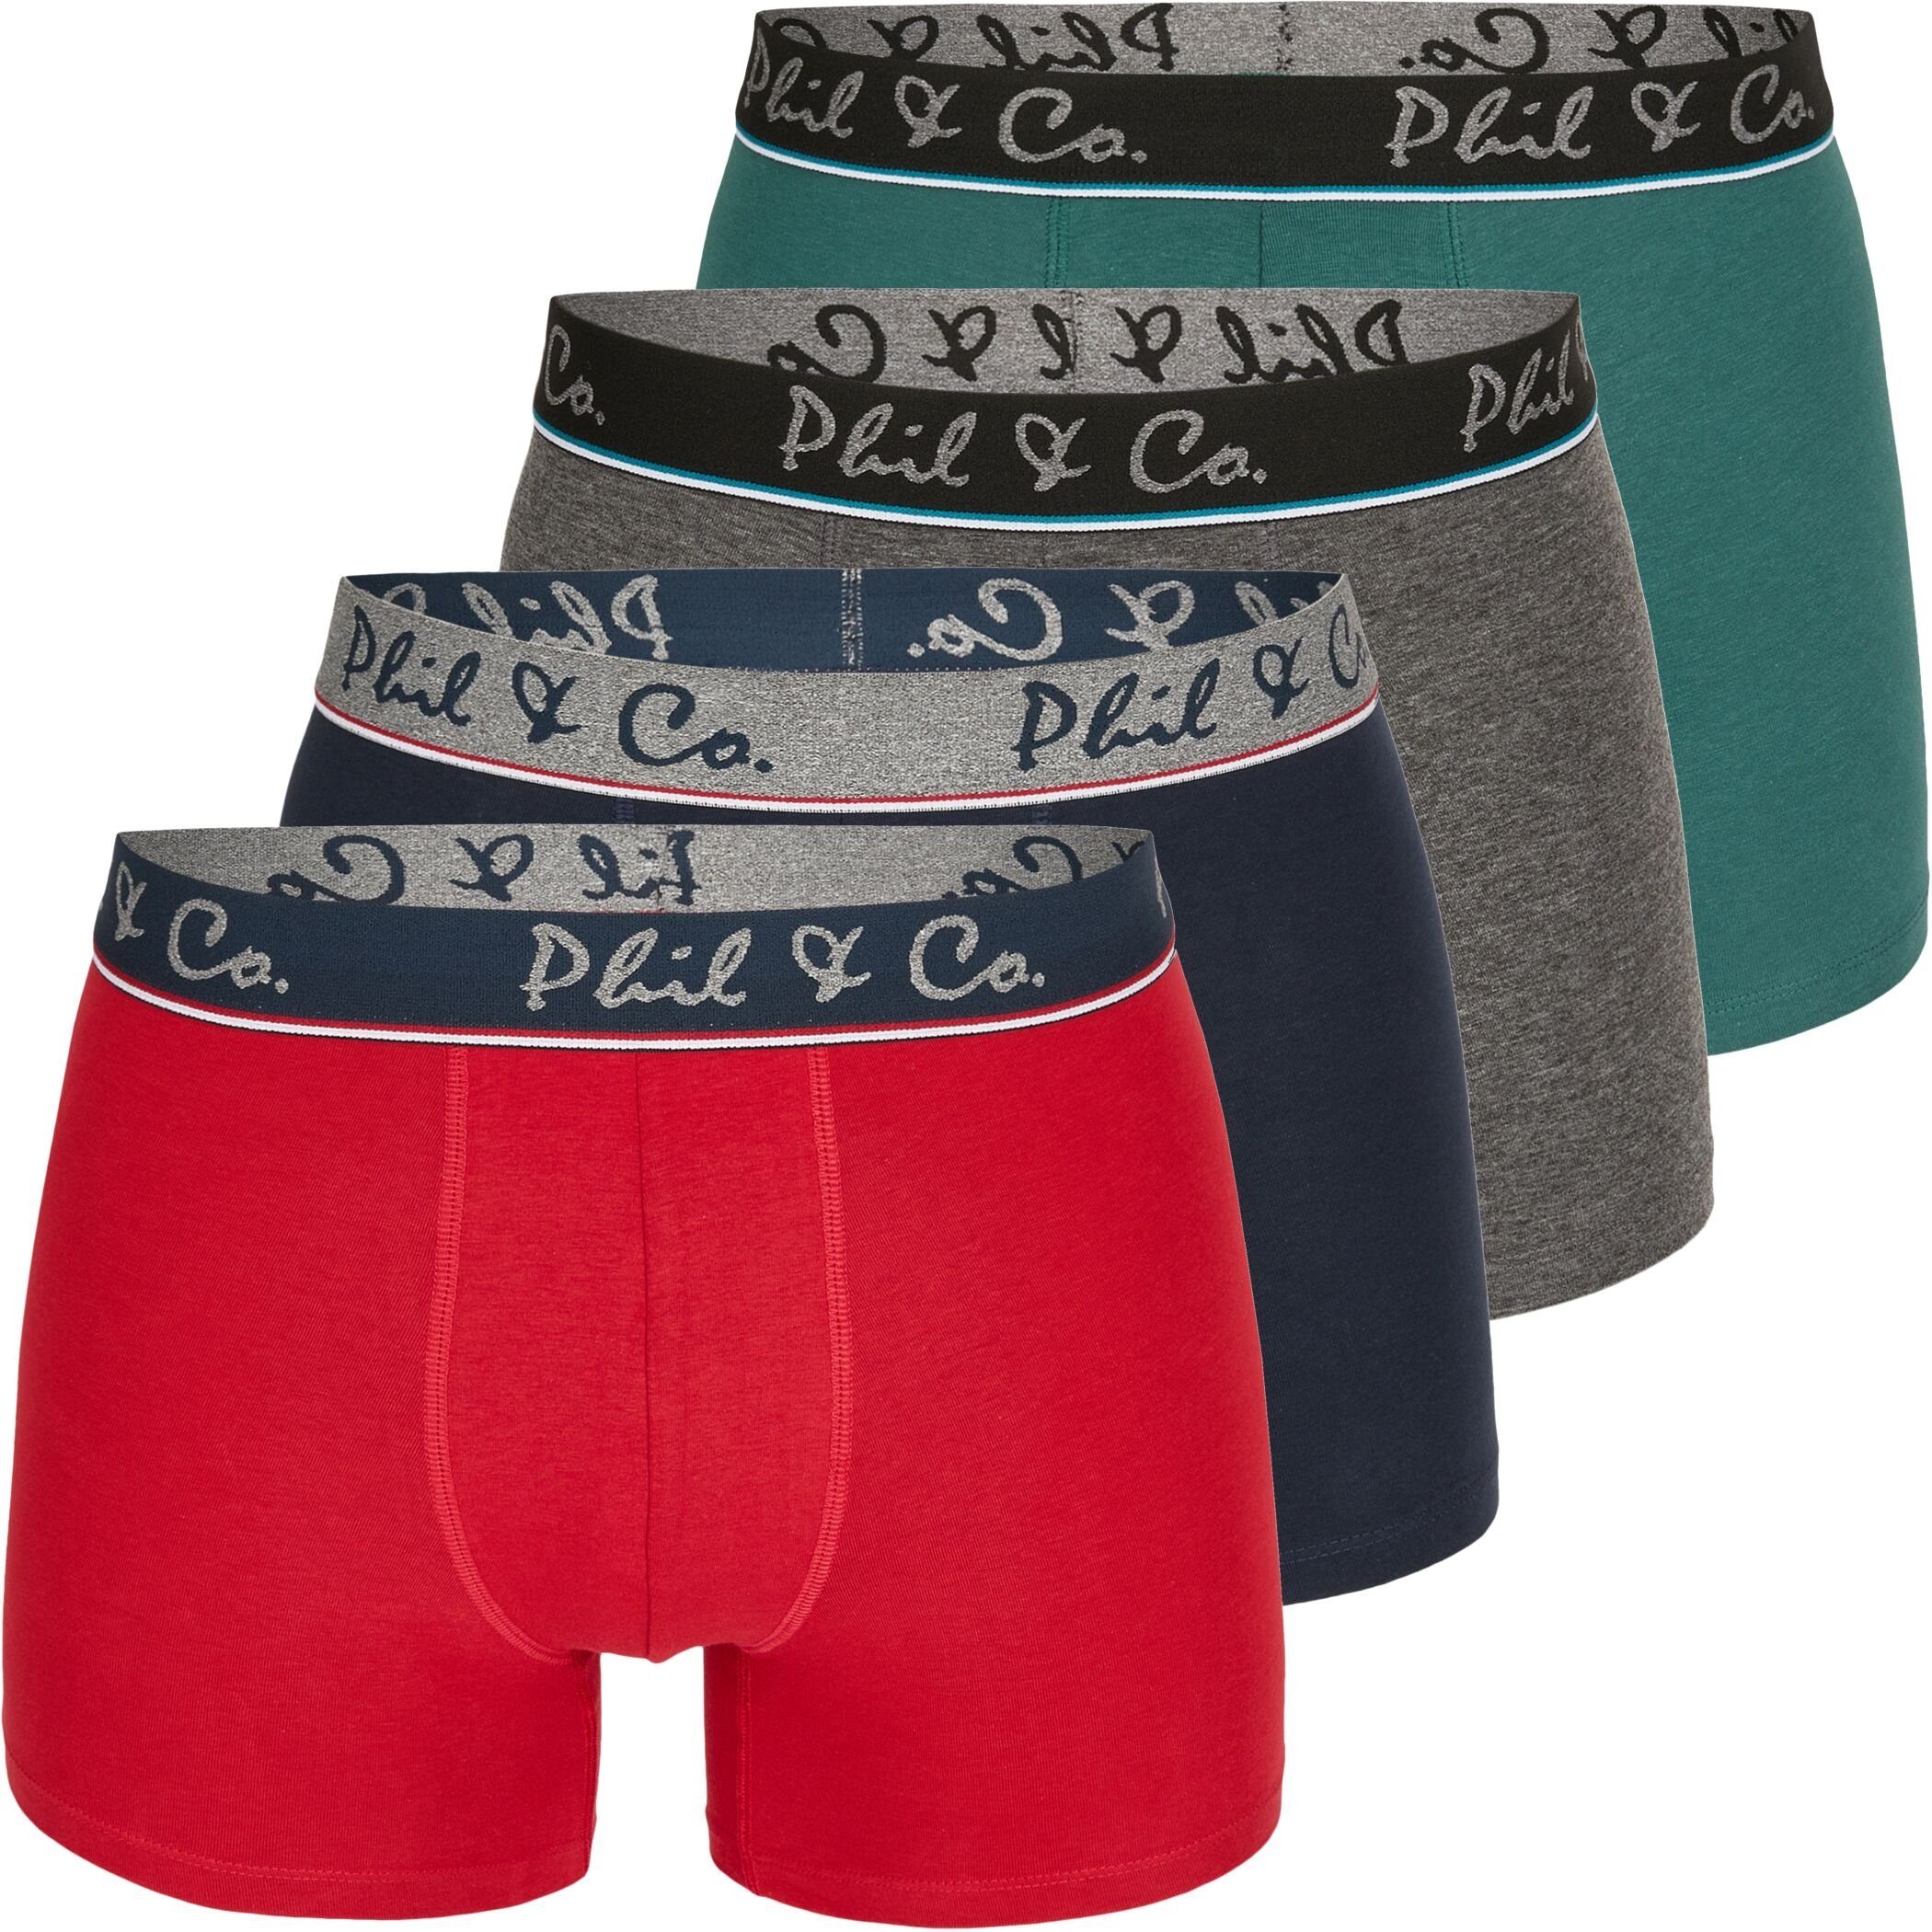 Phil & Co. Boxershorts 4er Pack Phil & Co Berlin Jersey Boxershorts Trunk Short Pant FARBWAHL (1-St) DESIGN 20